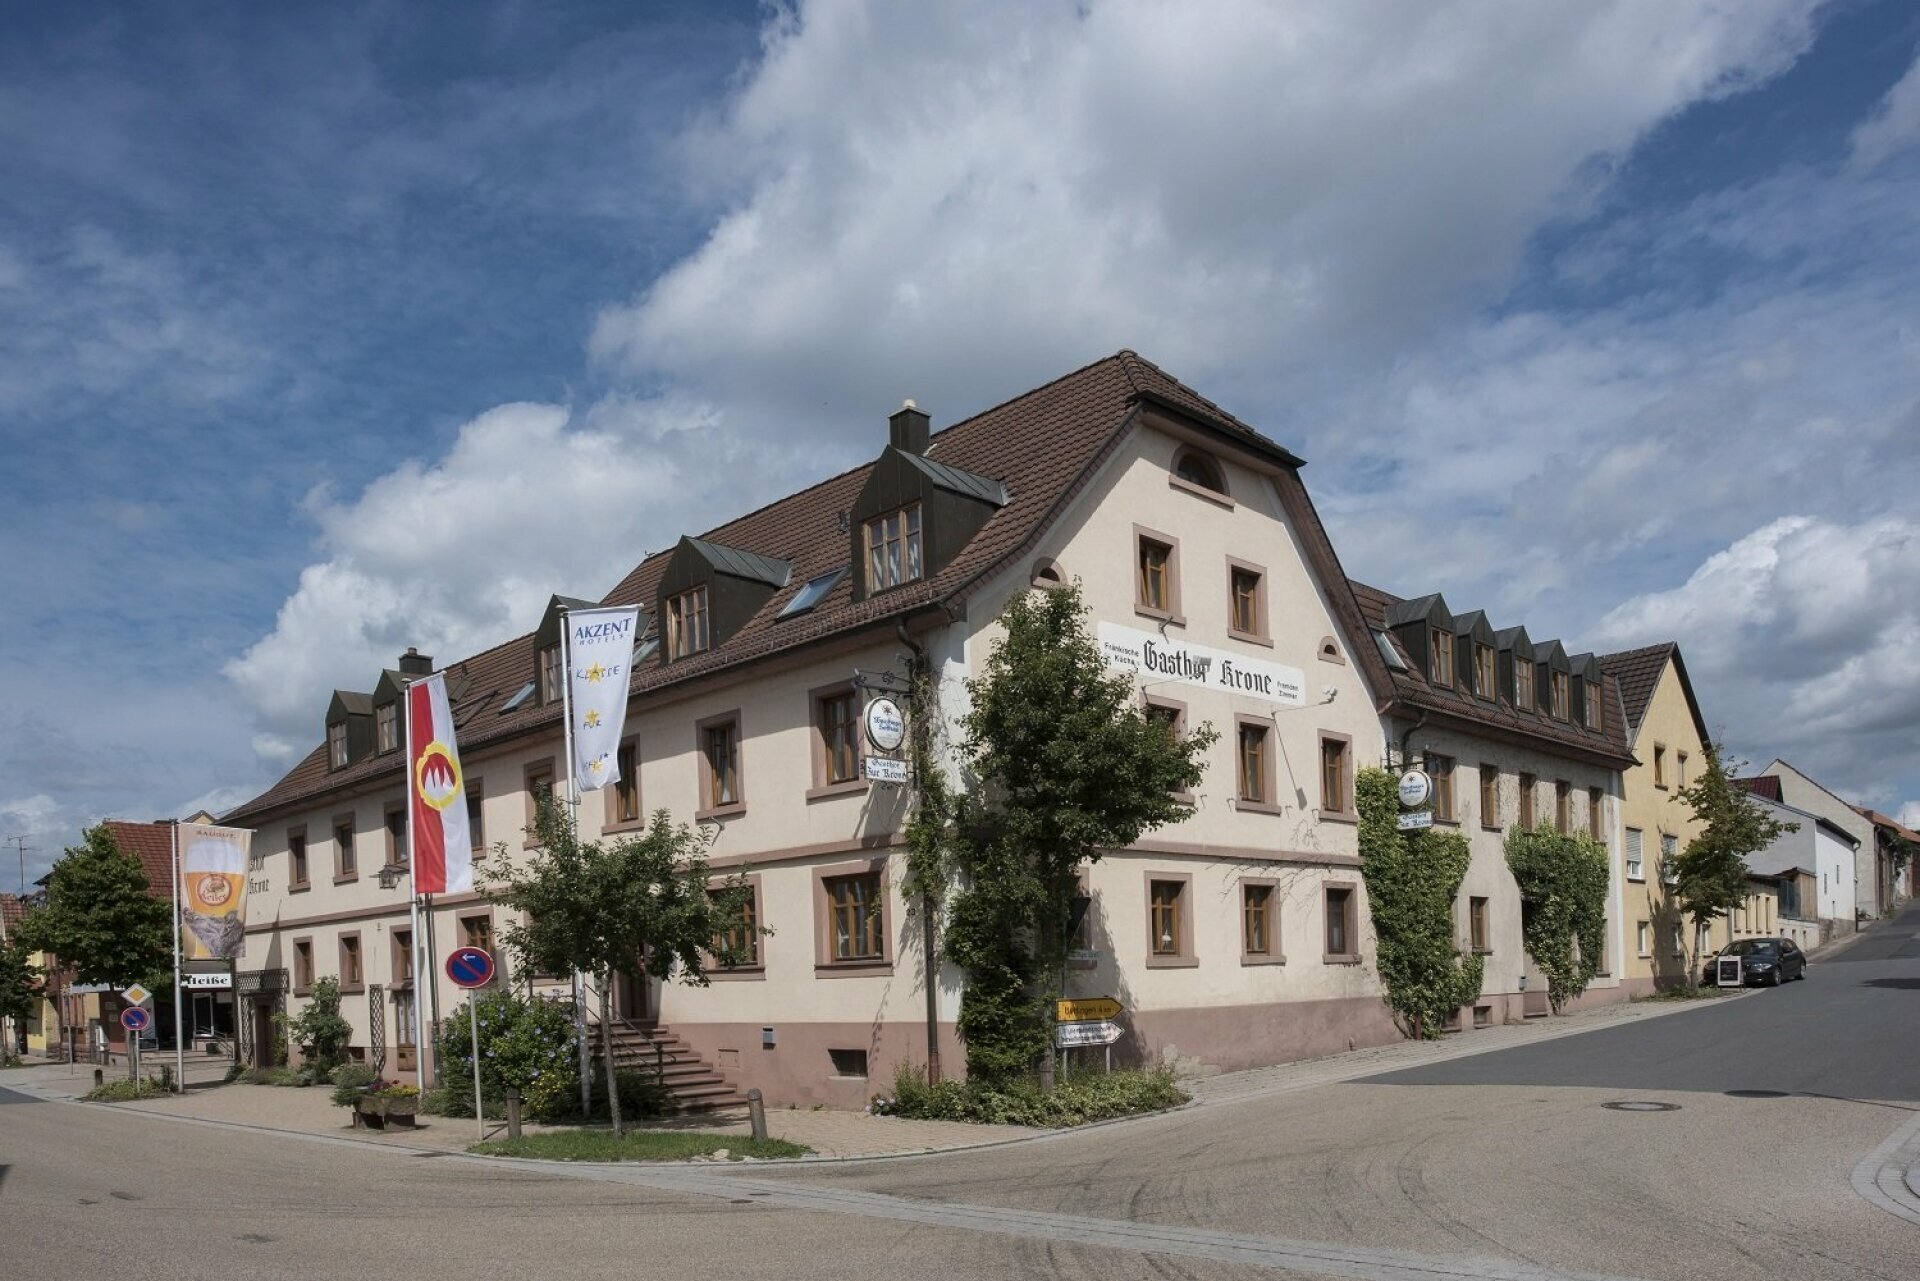 Main-Flußfahrt in Würzburg – AKZENT Hotel Krone